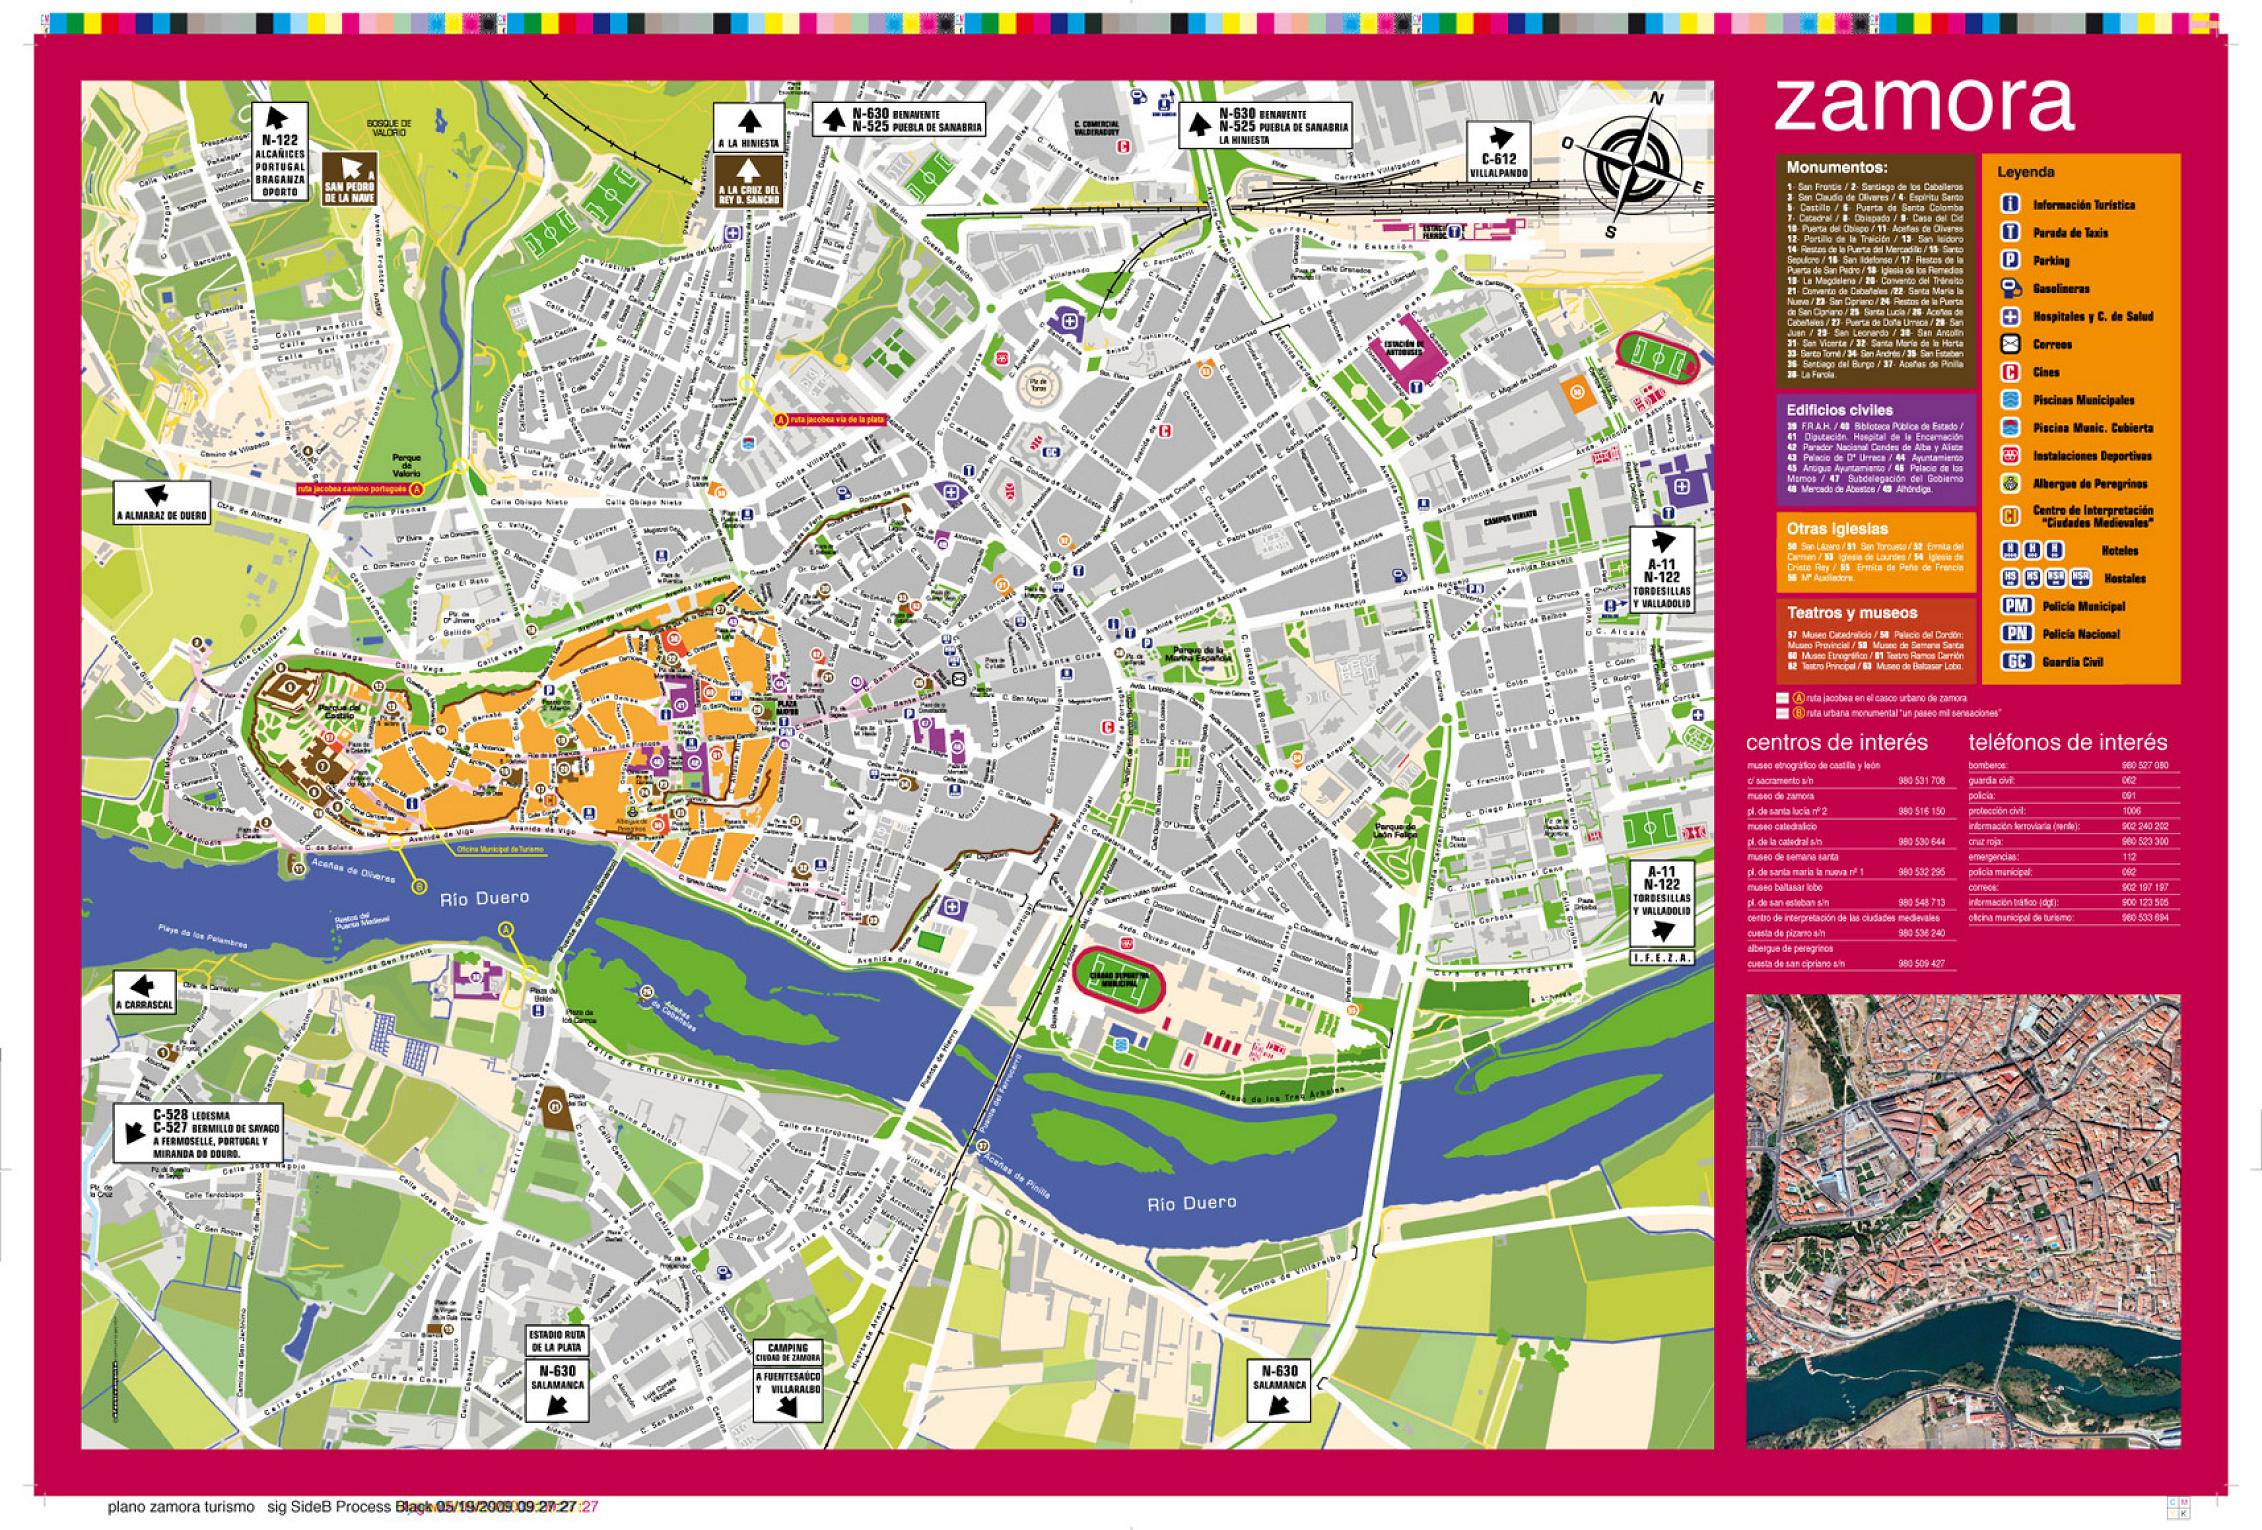 Mapa turístico de Zamora 2009